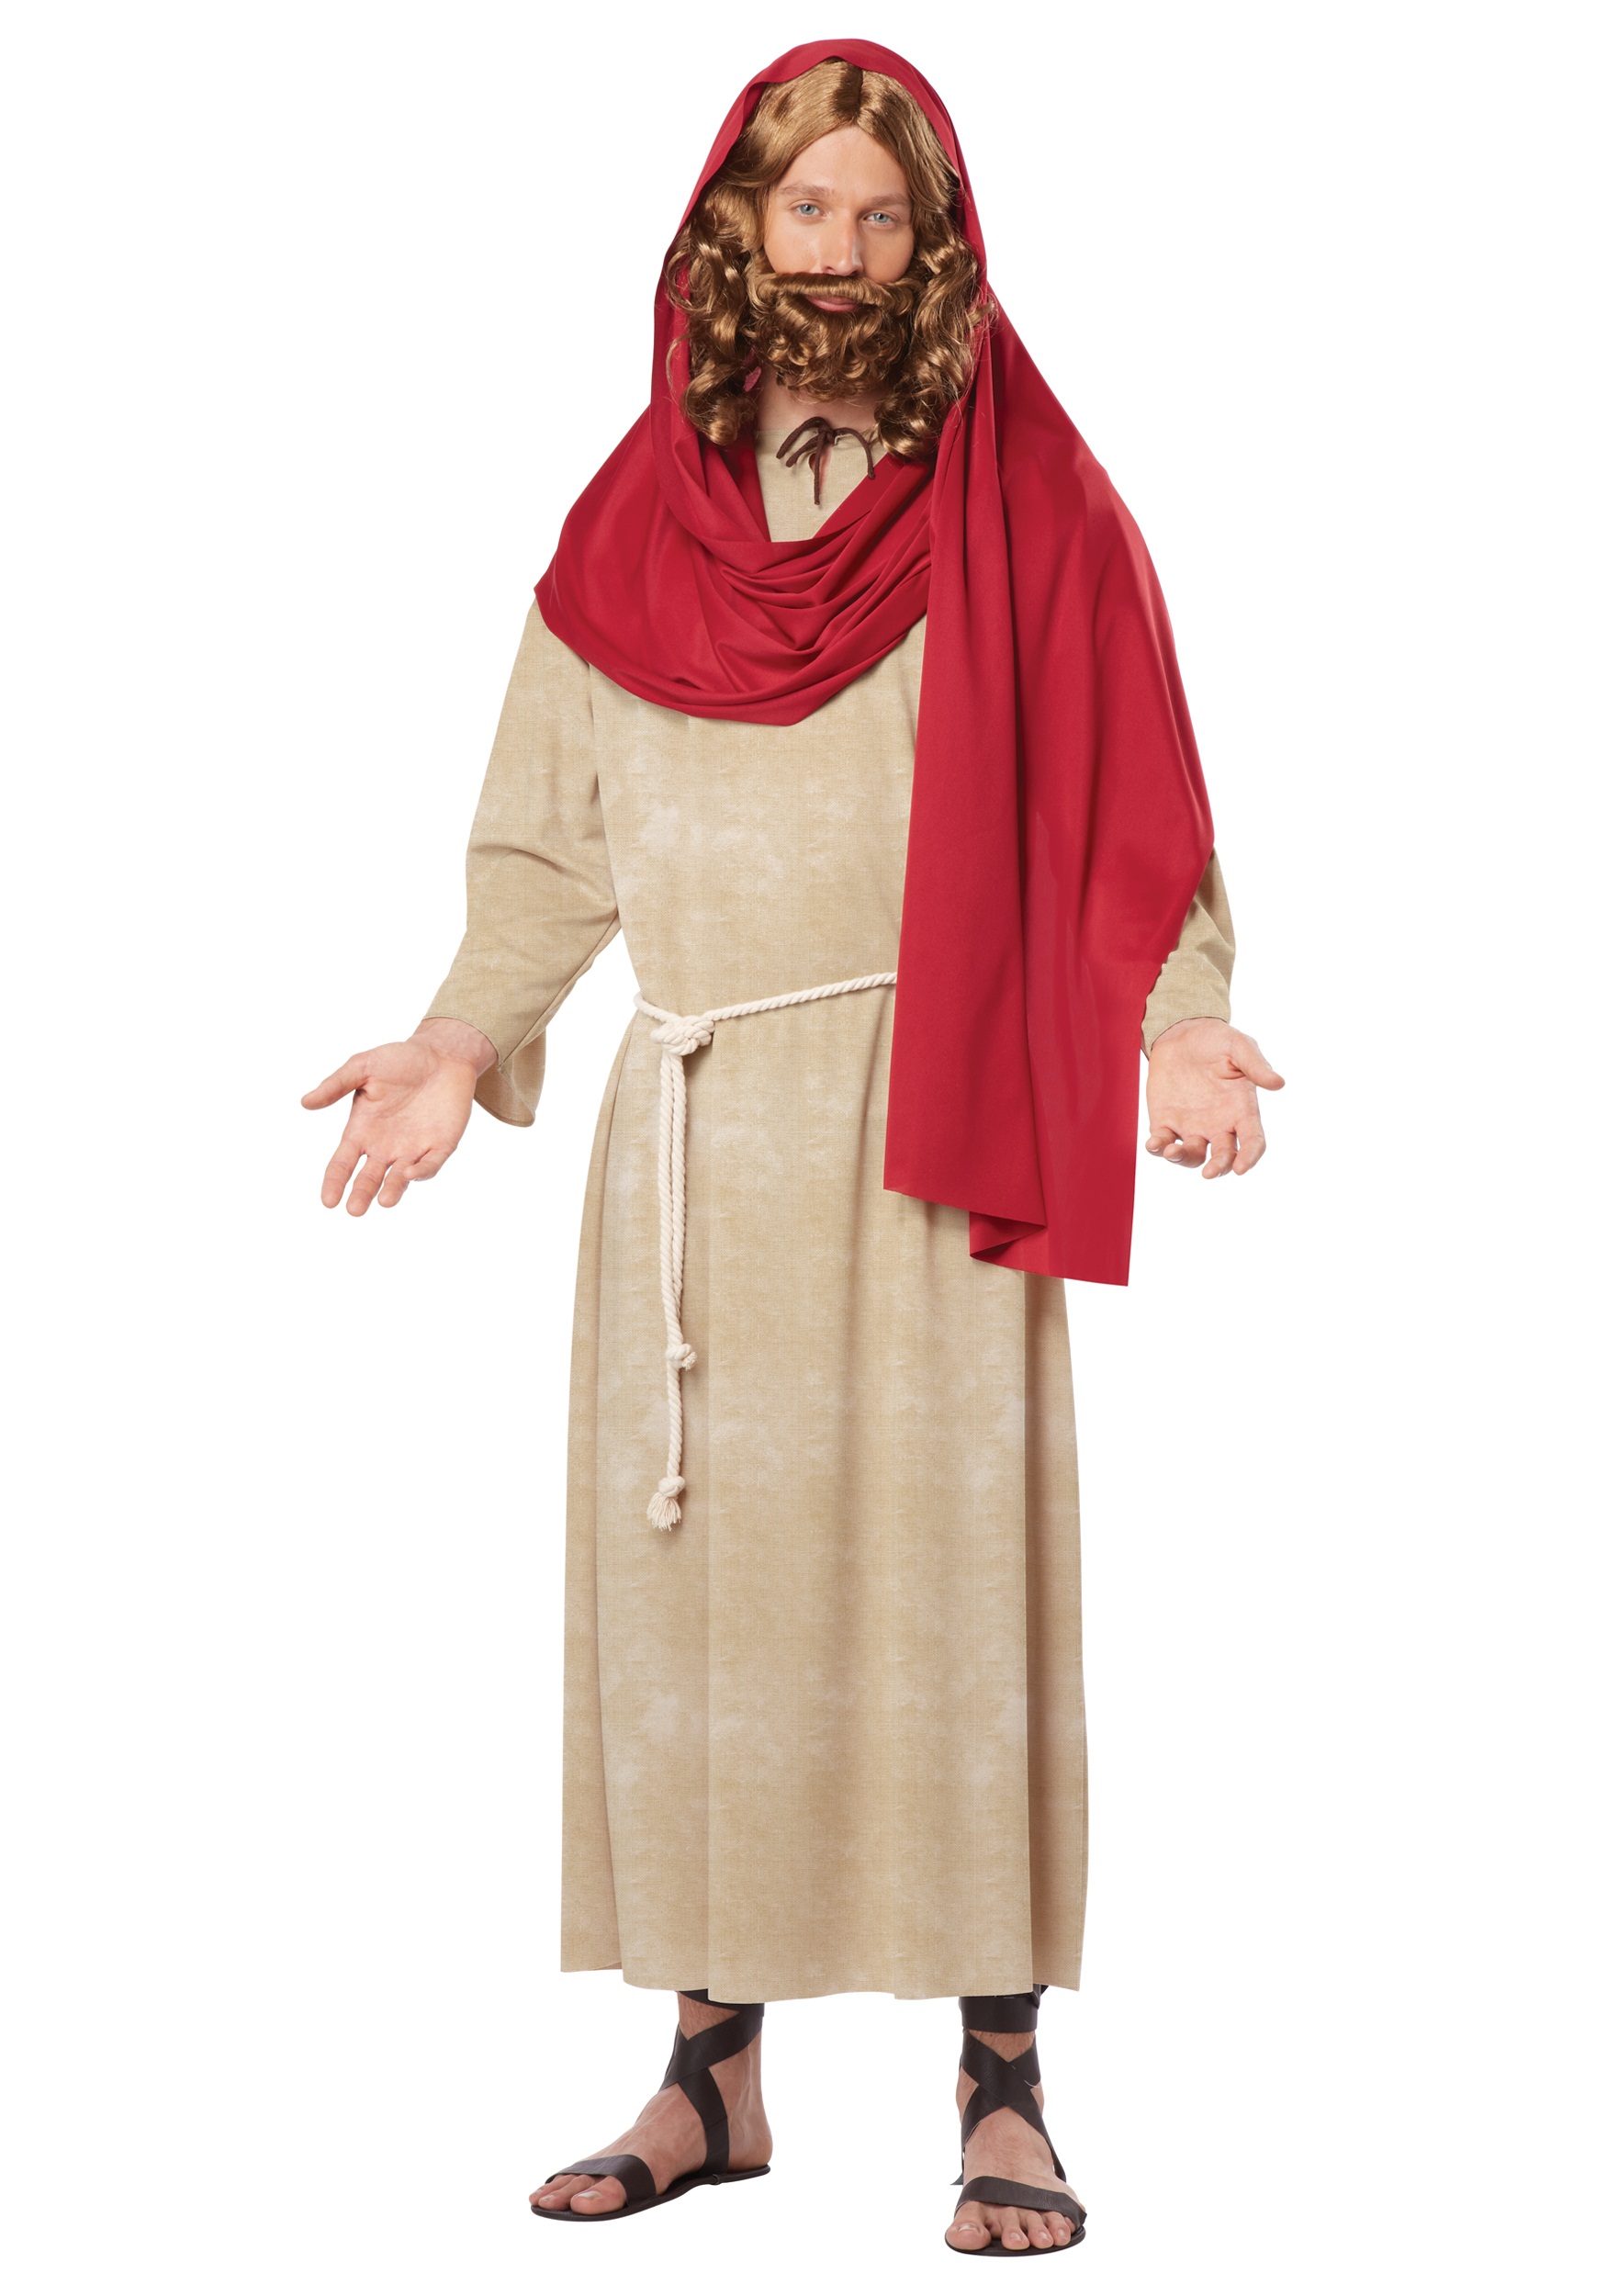 Jesus Christ Fancy Dress Costume For An Adult